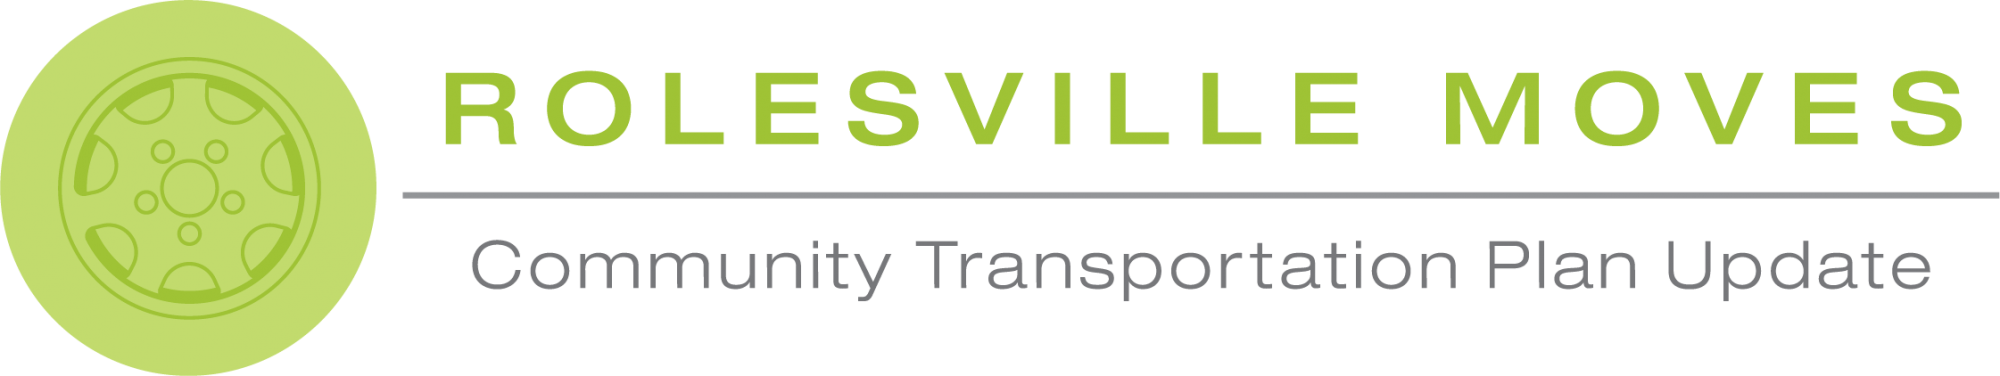 Rolesville Moves logo